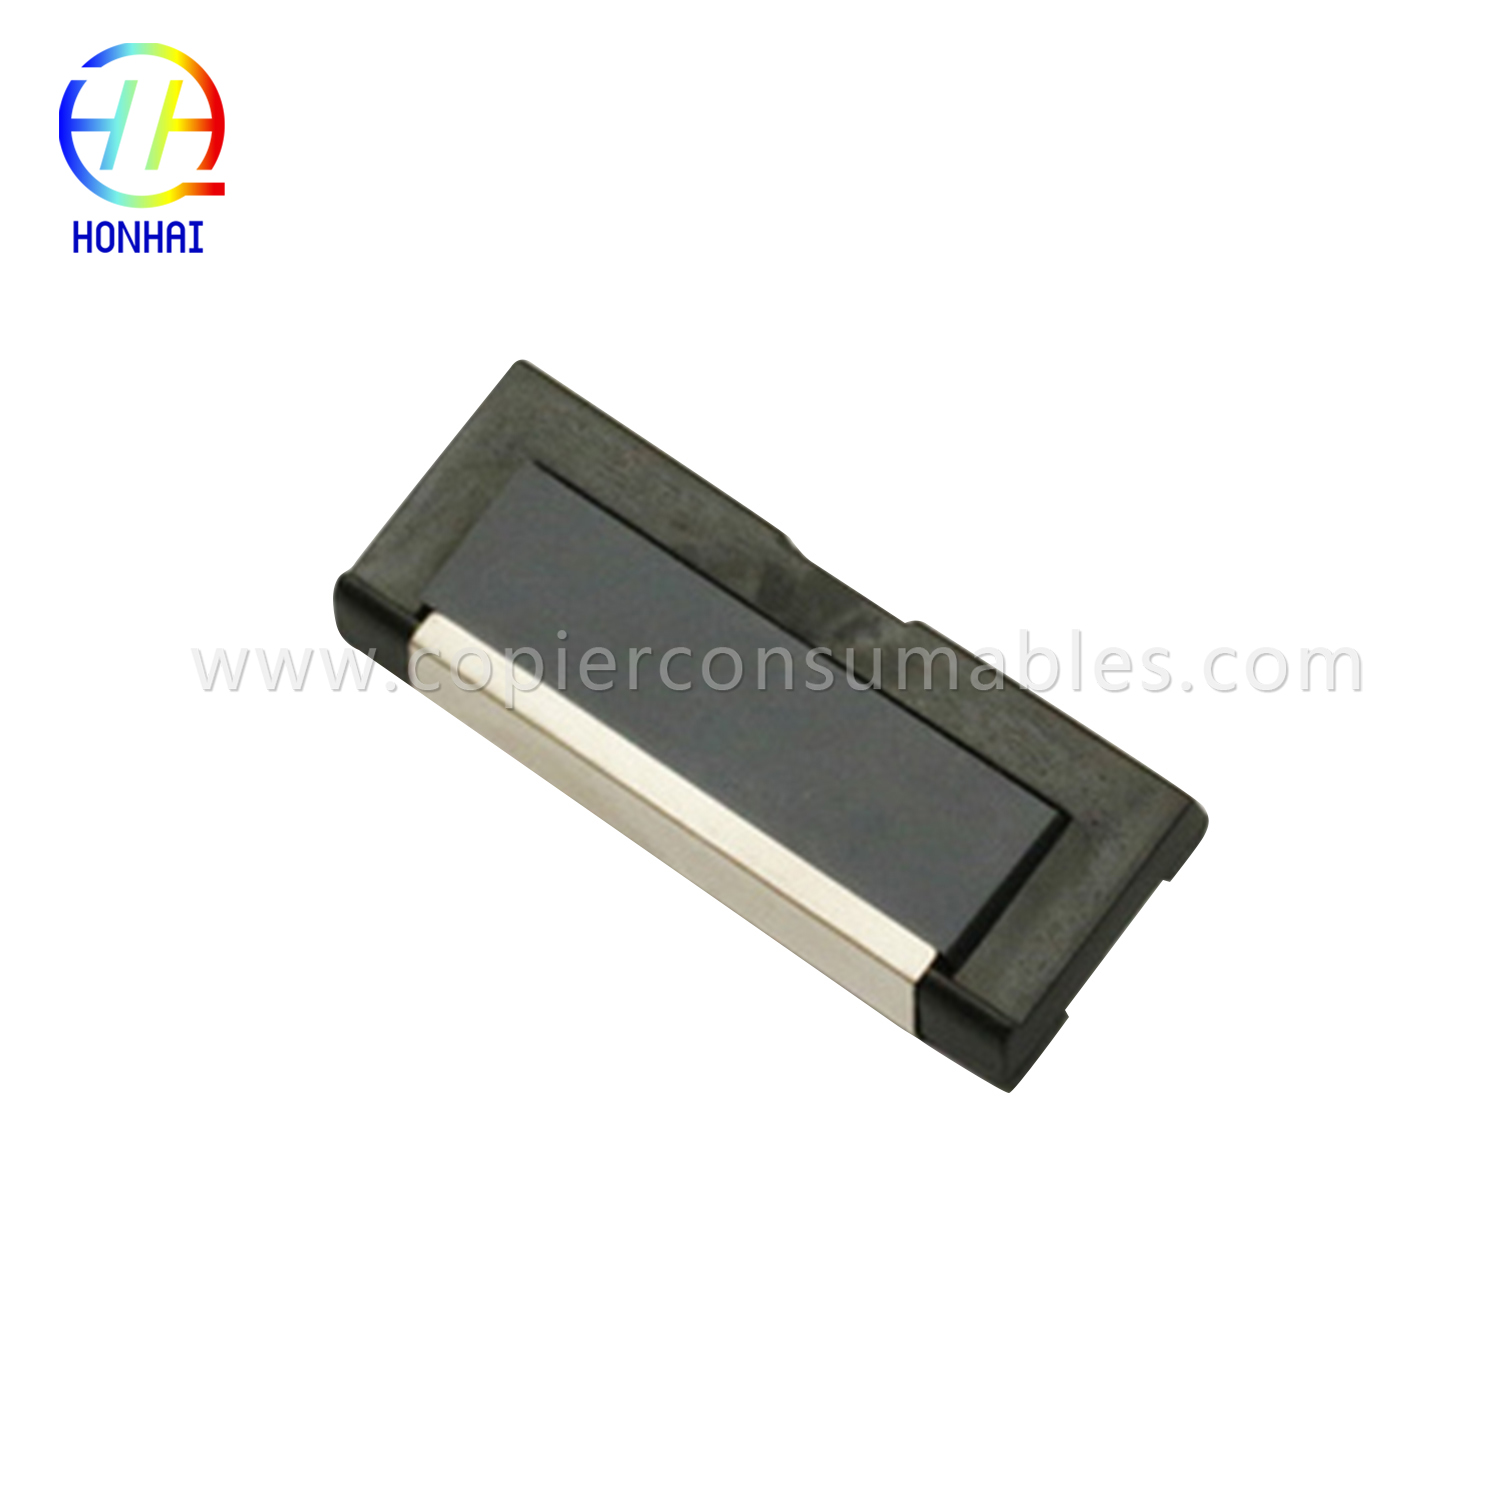 Separation Pad Tray 1 for HP LaserJet 5000 5100 (RF5-4119-000)